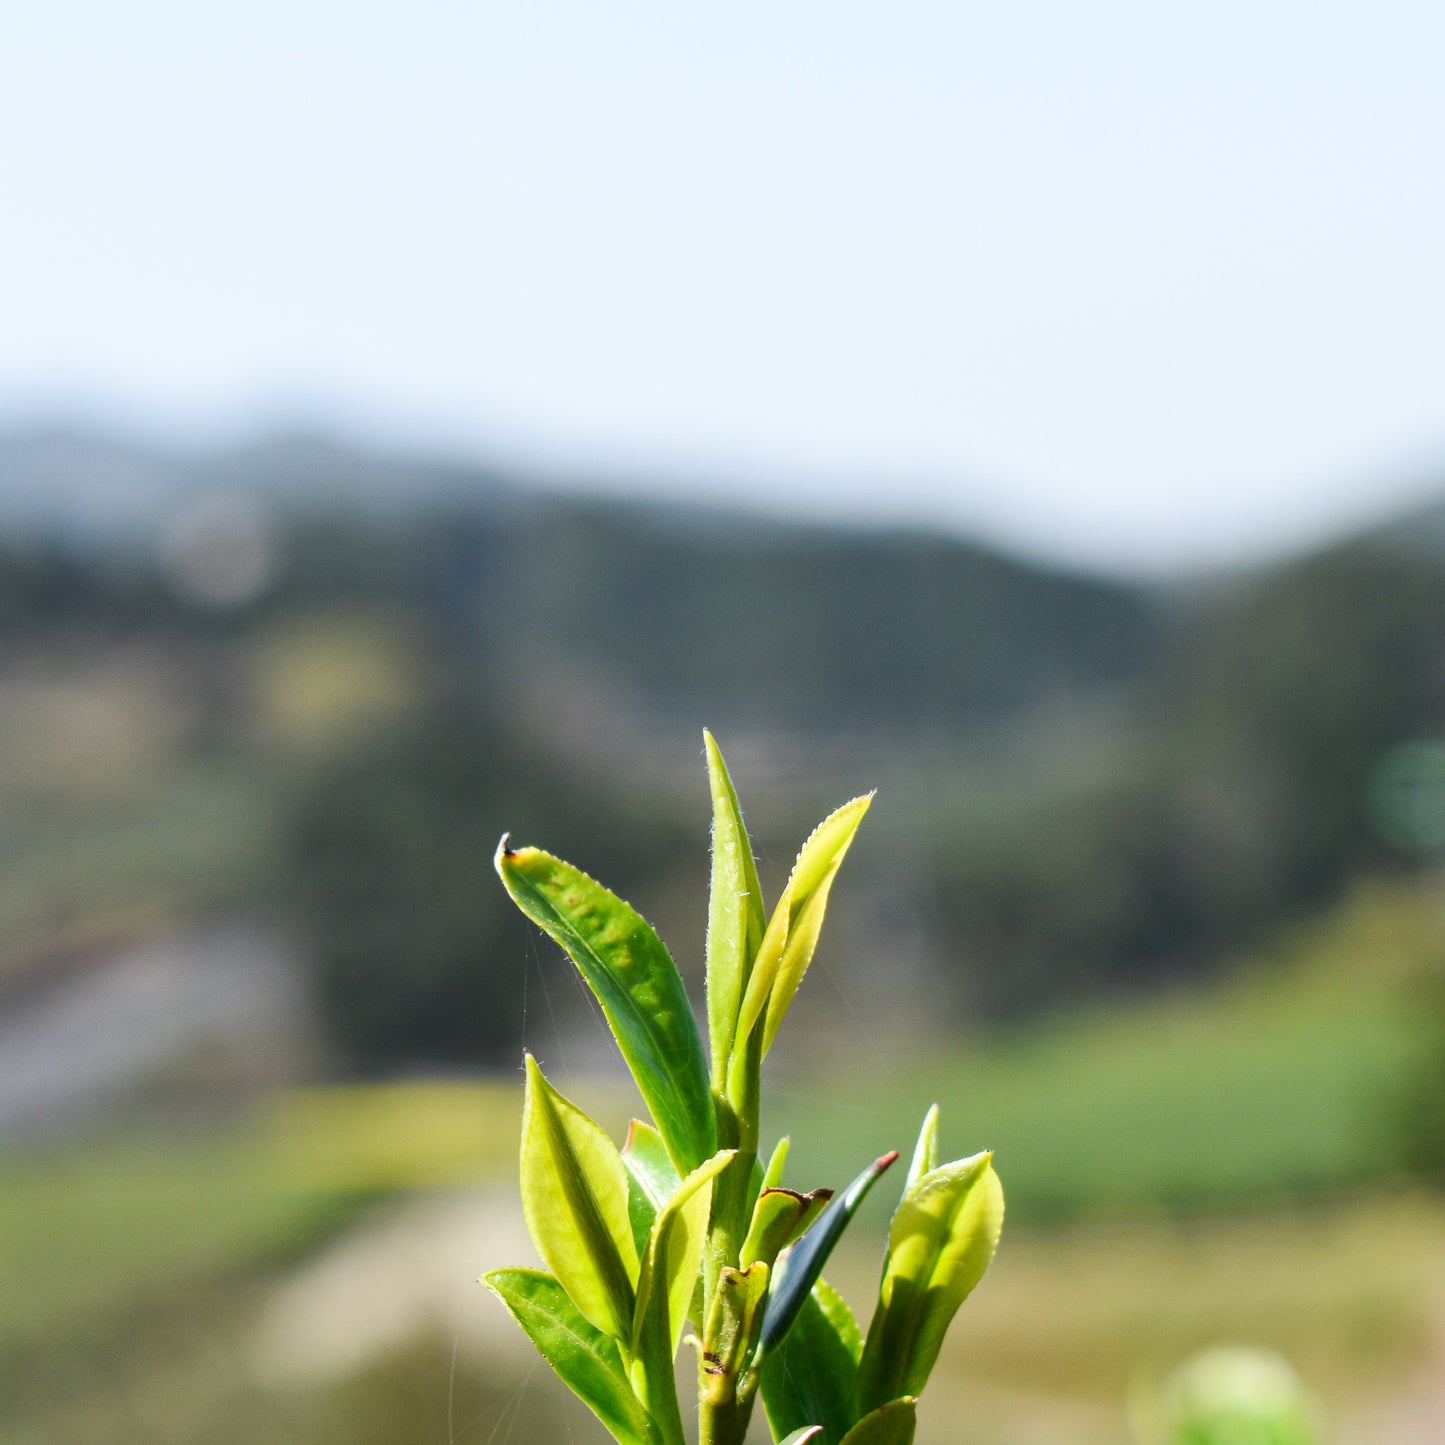 Azuma Tea Garden: Ipponmatsu - Okumidori Cultivar